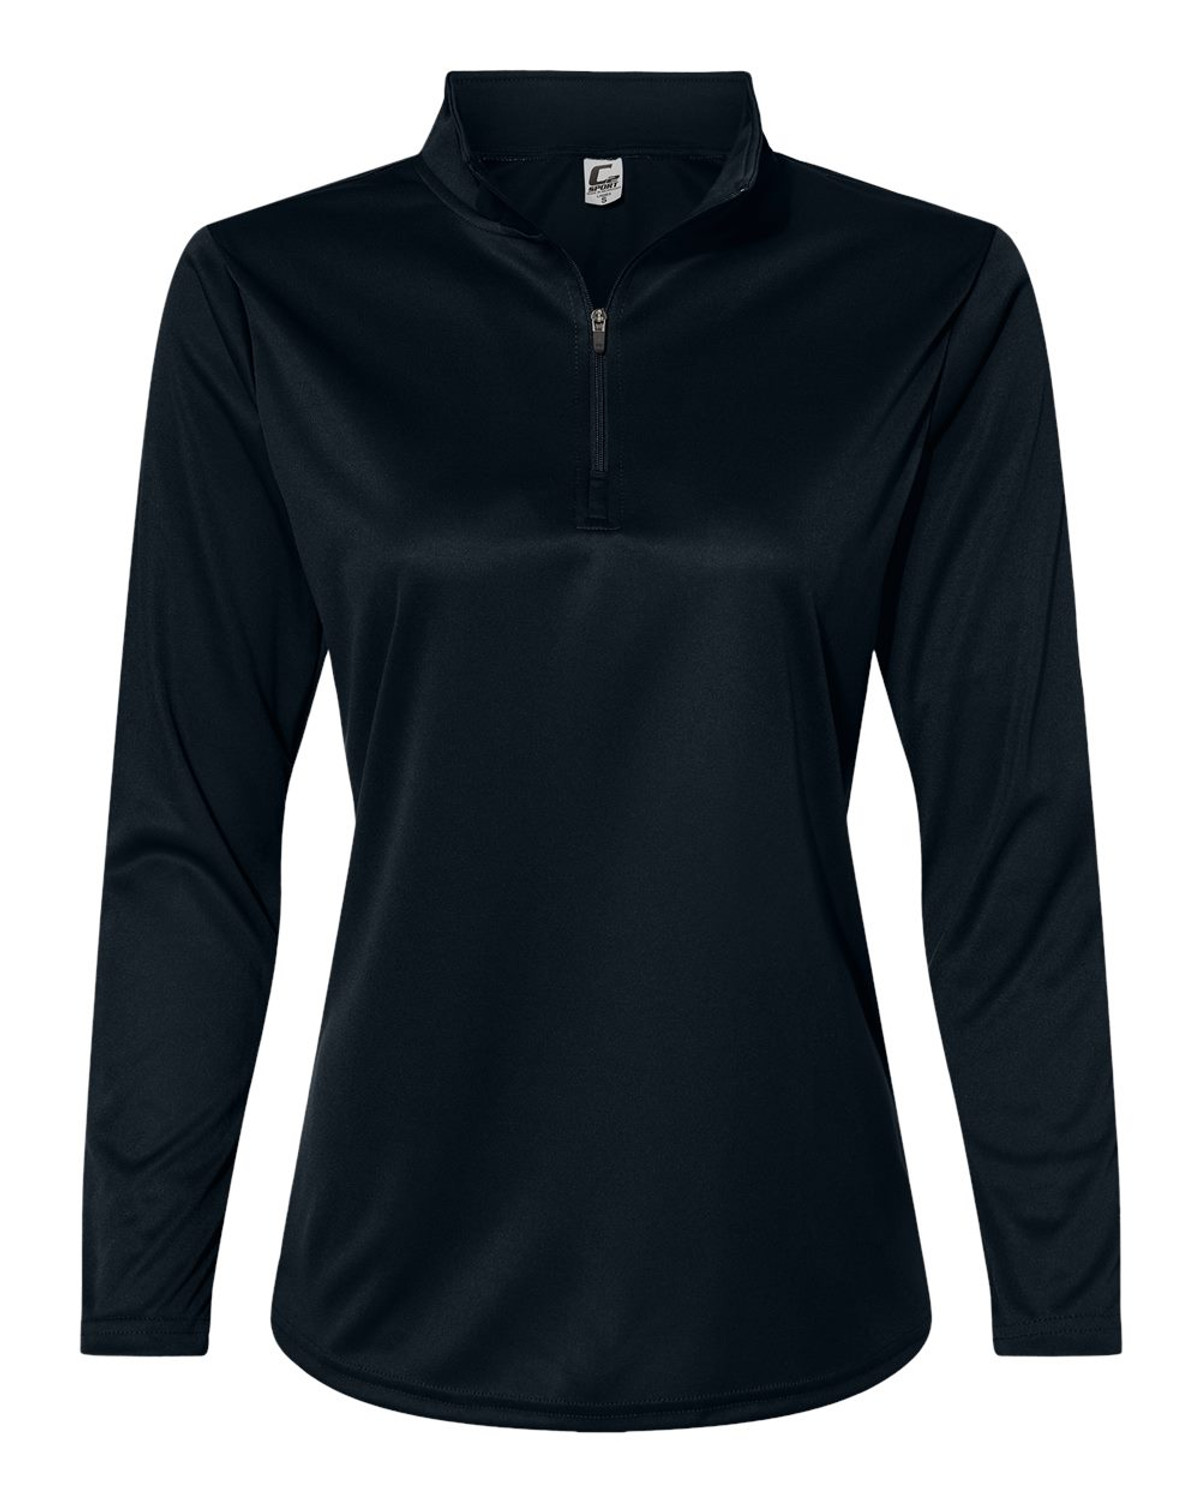  Women's Long Sleeve Athletic Shirts Quarter Zip